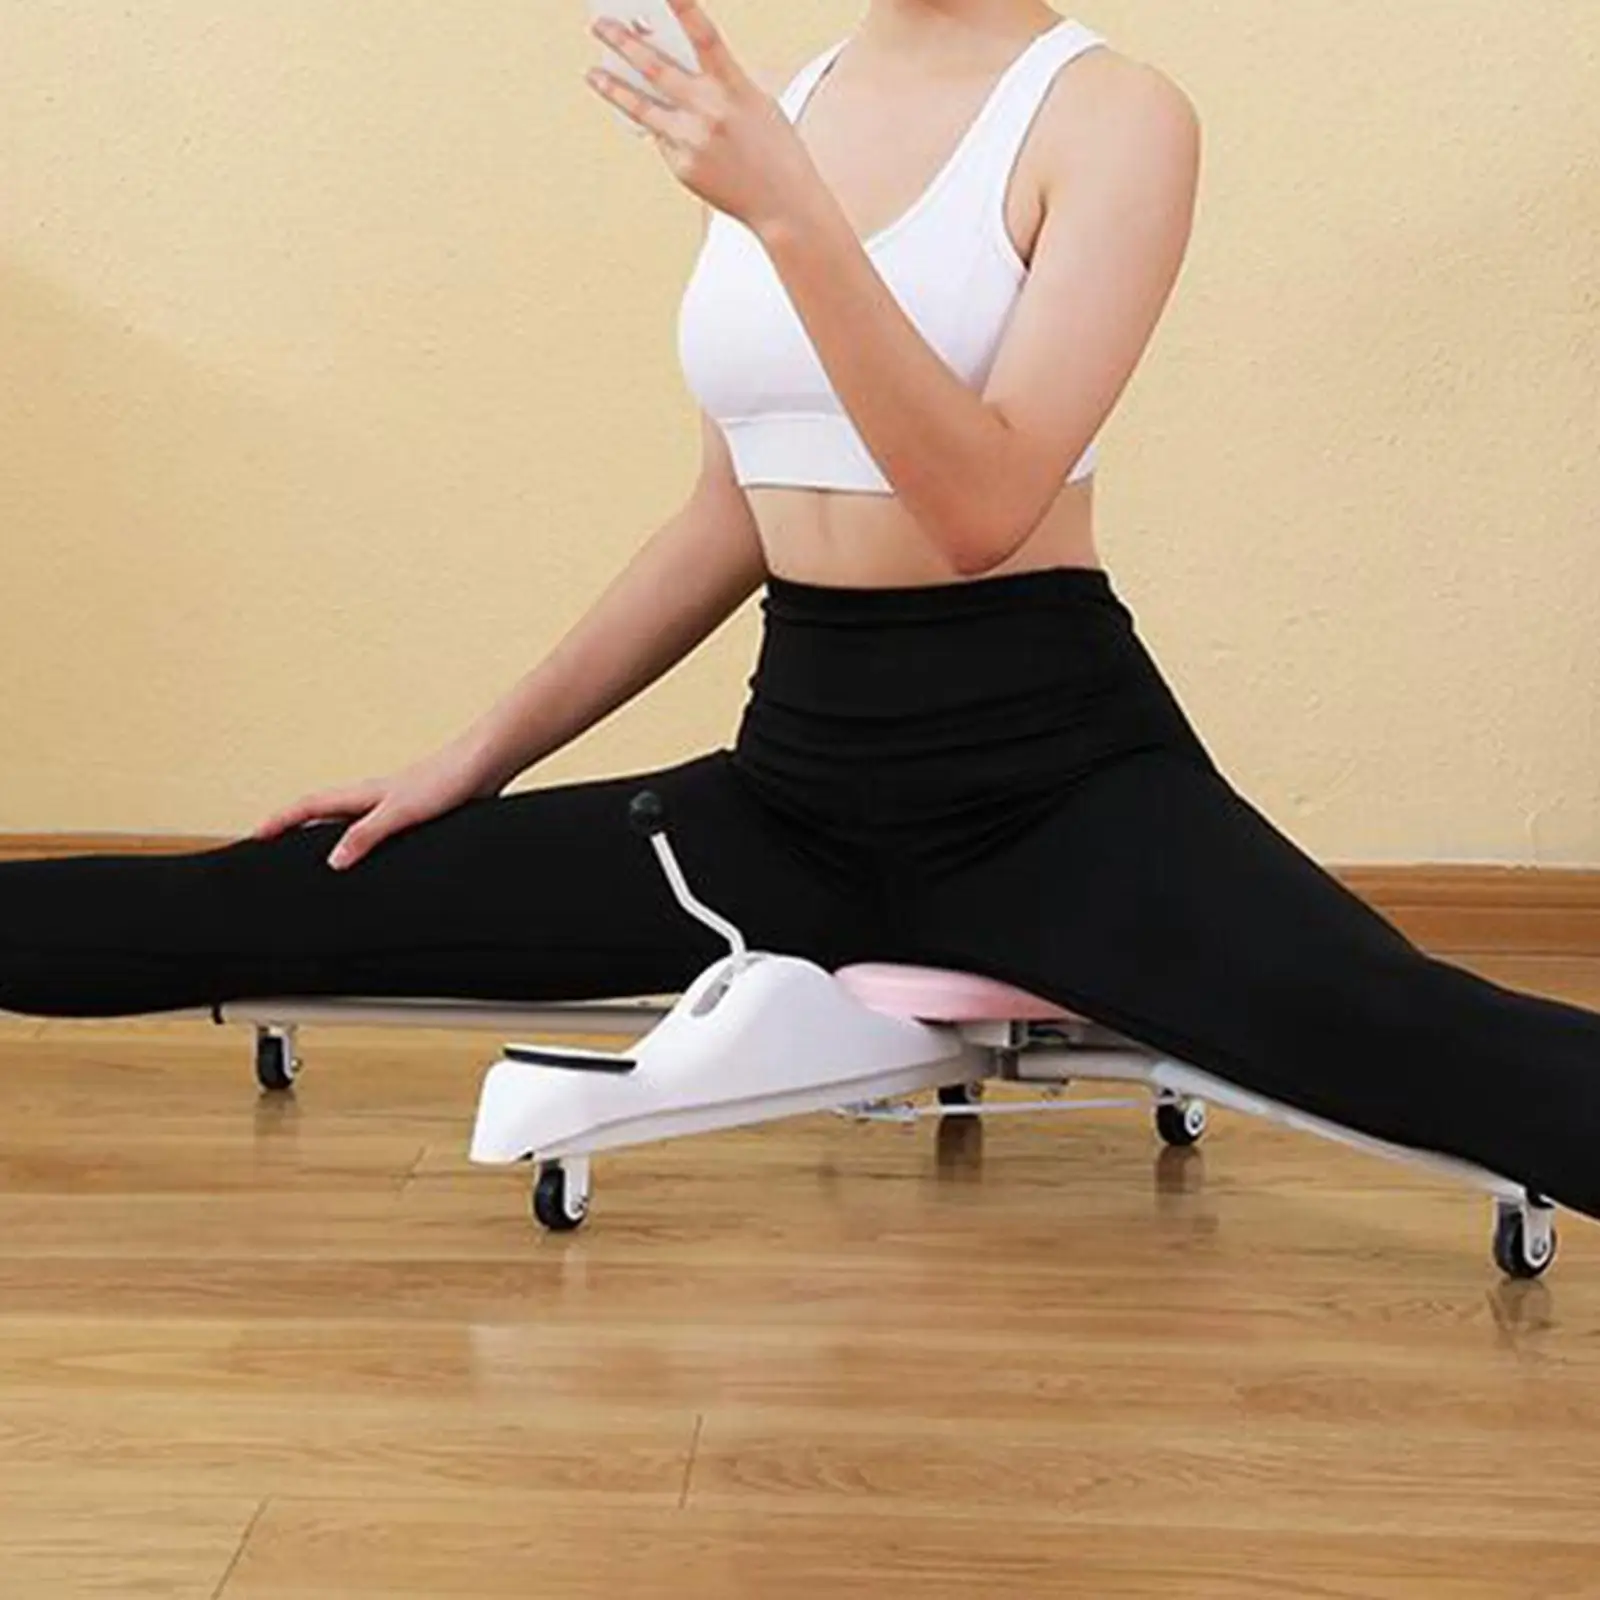 Leg Stretcher Stretching Fitness Exercise Split Machine for Yoga Dance Gymnastics